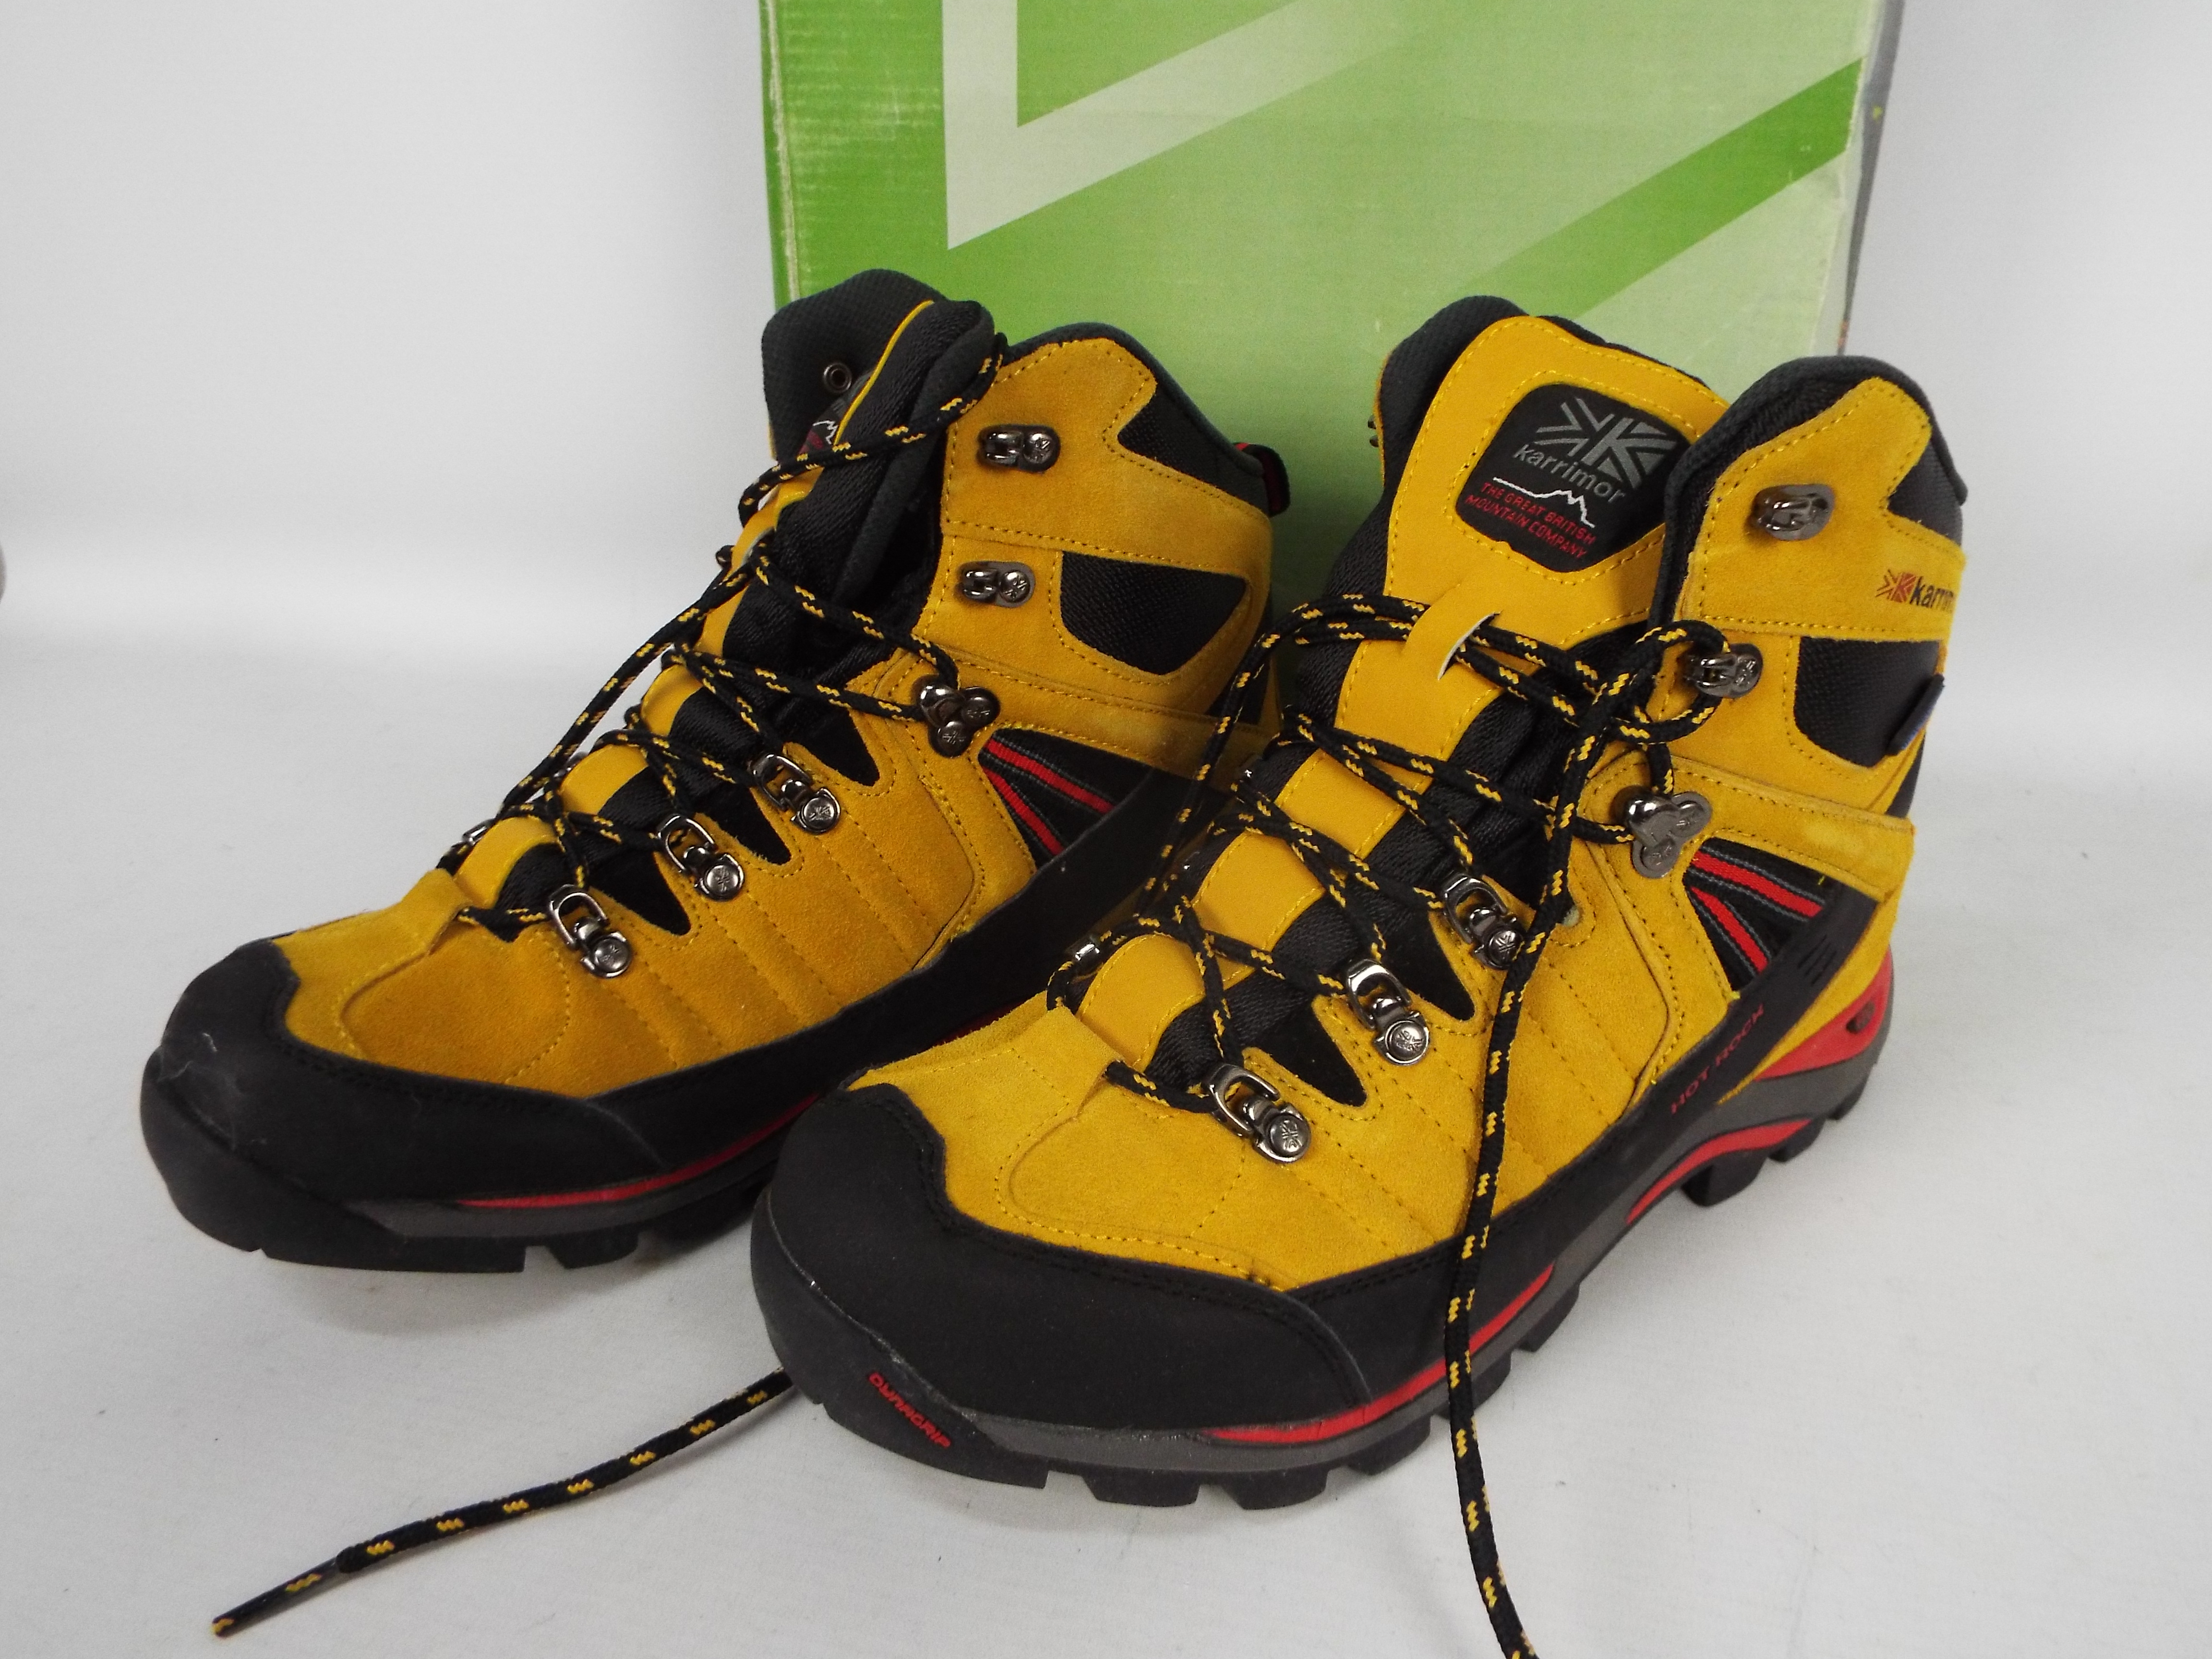 Karrimor Hot Rock Mid III weathertite XTR - a pair of yellowwalking boots, UK size 8. - Image 2 of 4